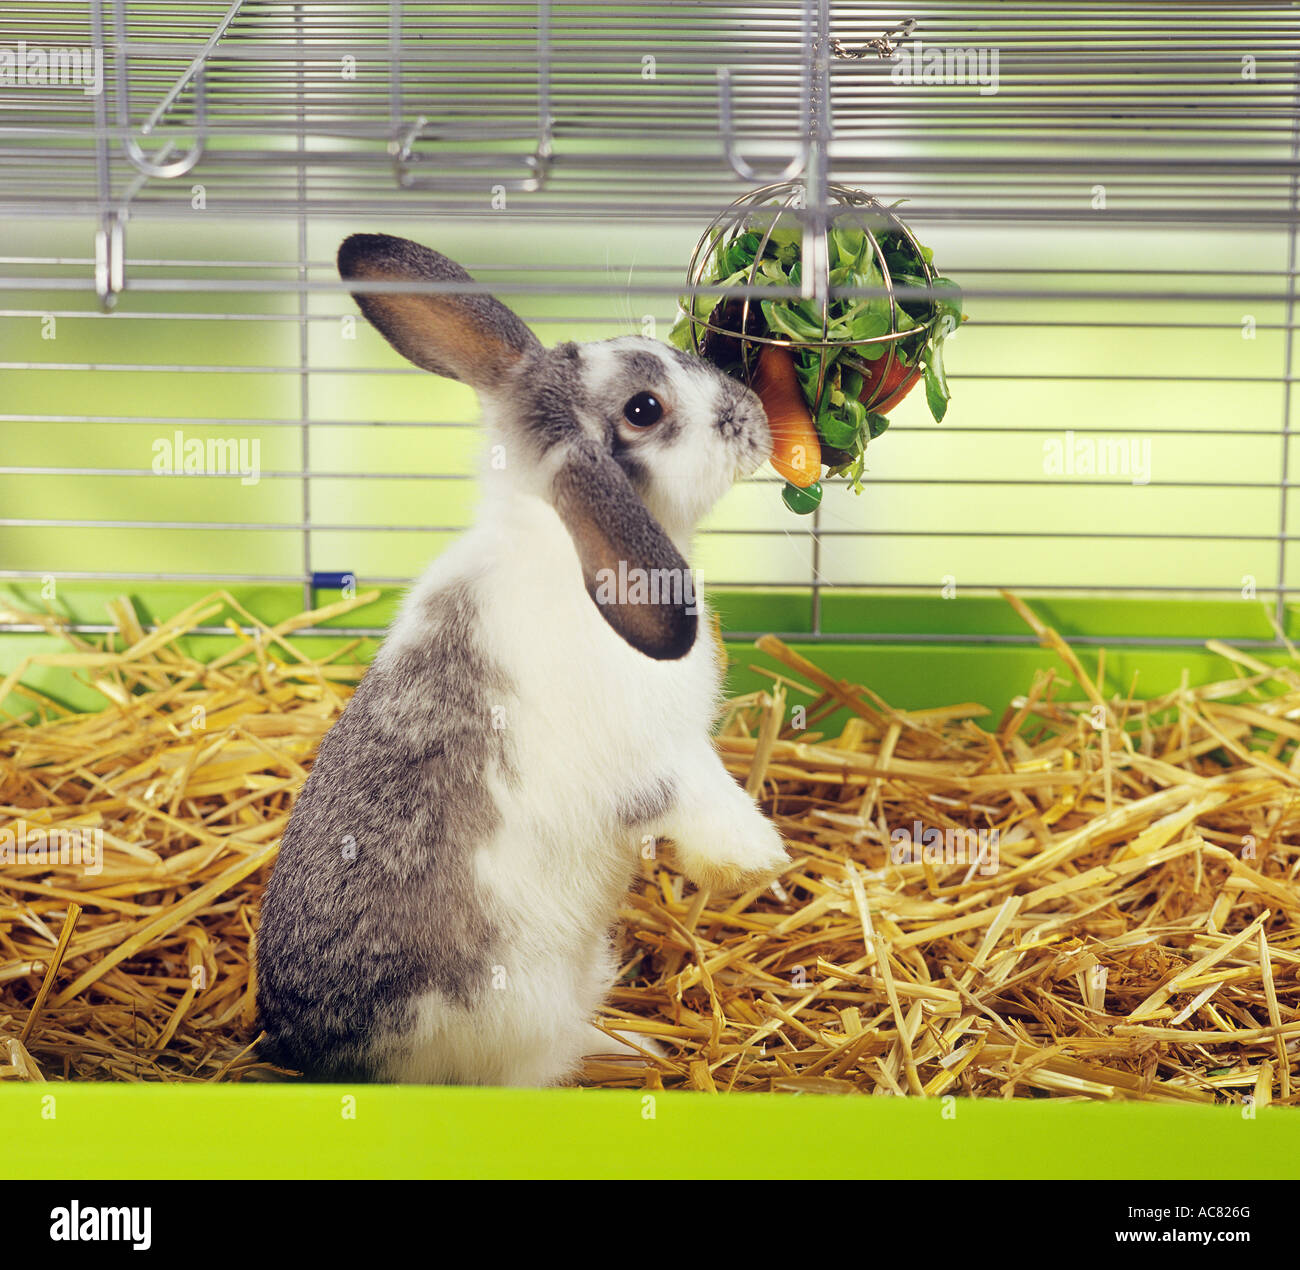 Lop-eared dwarf rabbit in gabbia di mangiare Foto Stock